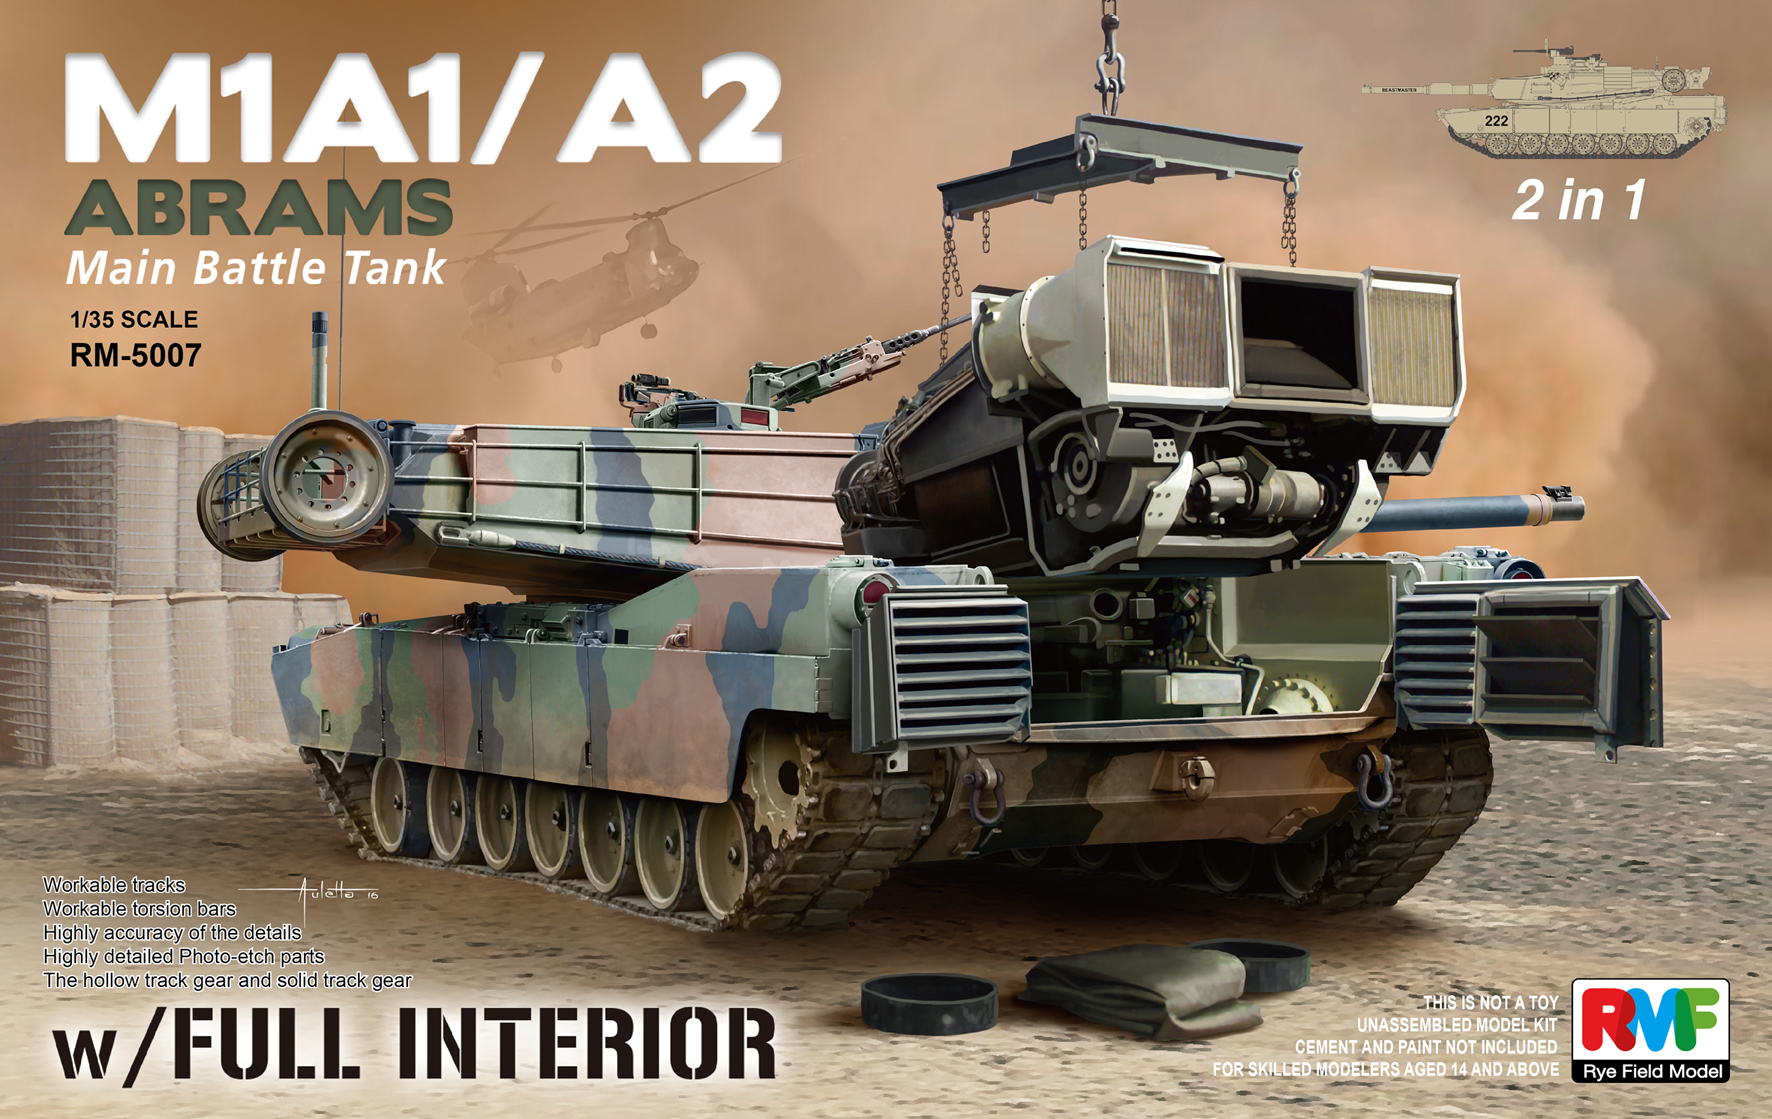 M1A1 / A2 Abrams w/Full Interior (2 in 1)